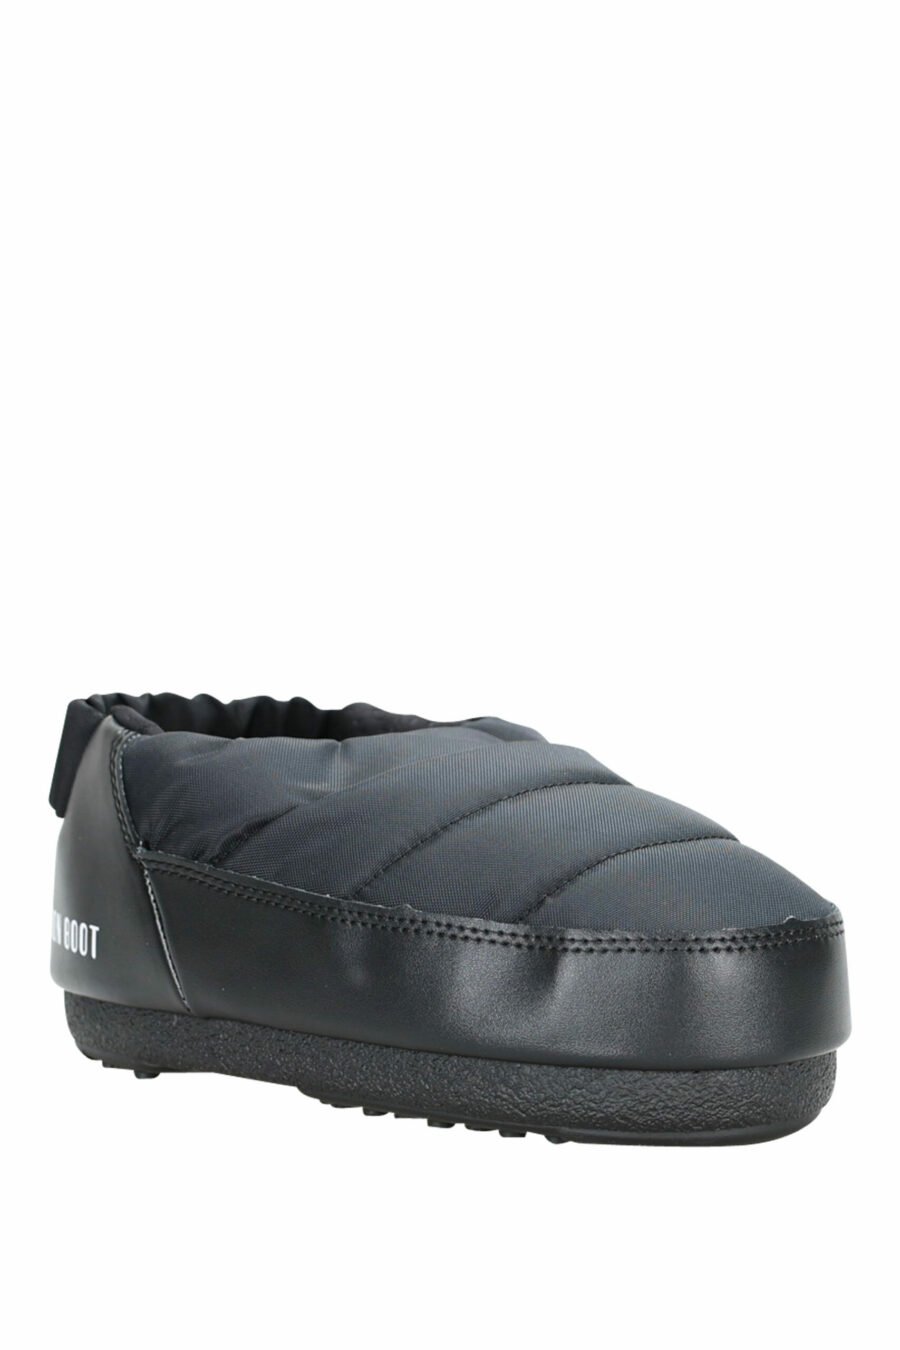 Black sandals with white mini-logo - 8050032004042 1 scaled